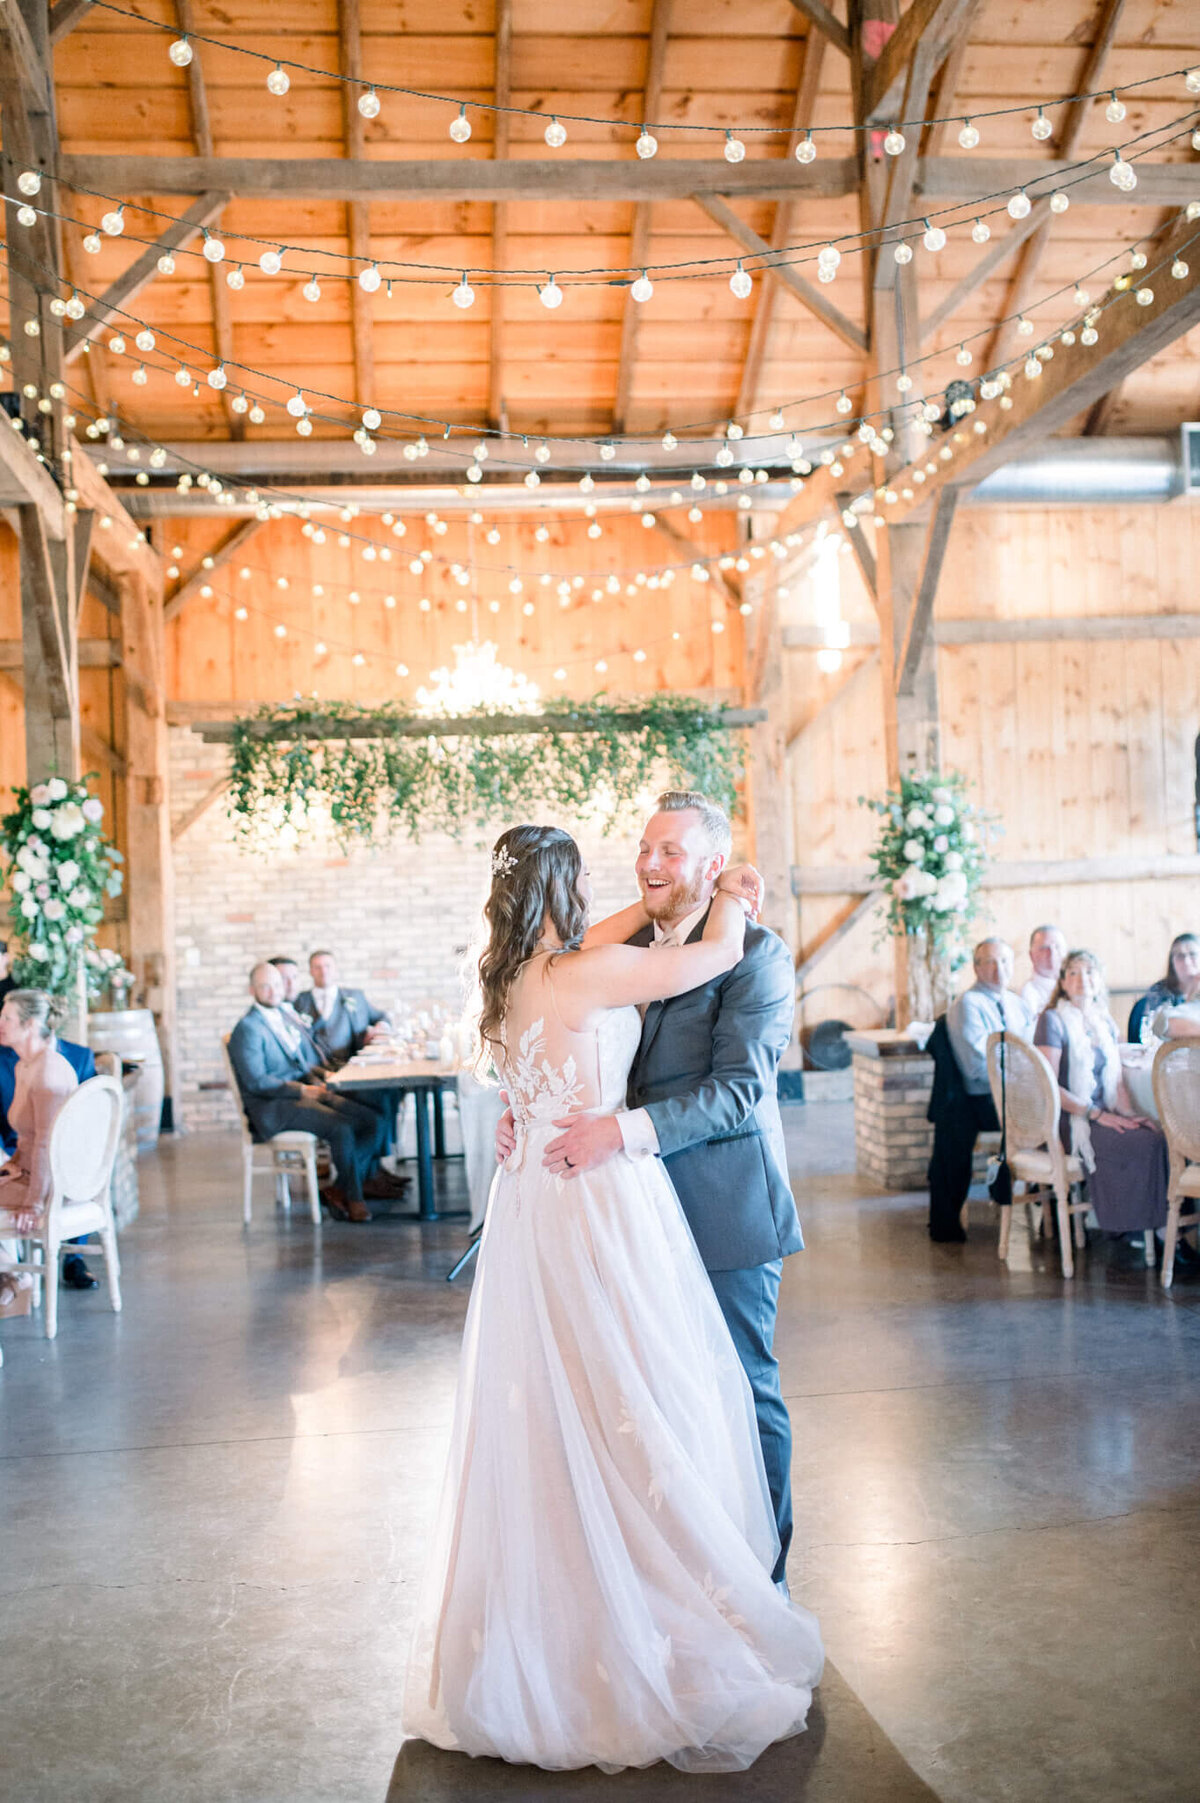 Bride and groom dance at their Toronto barn wedding